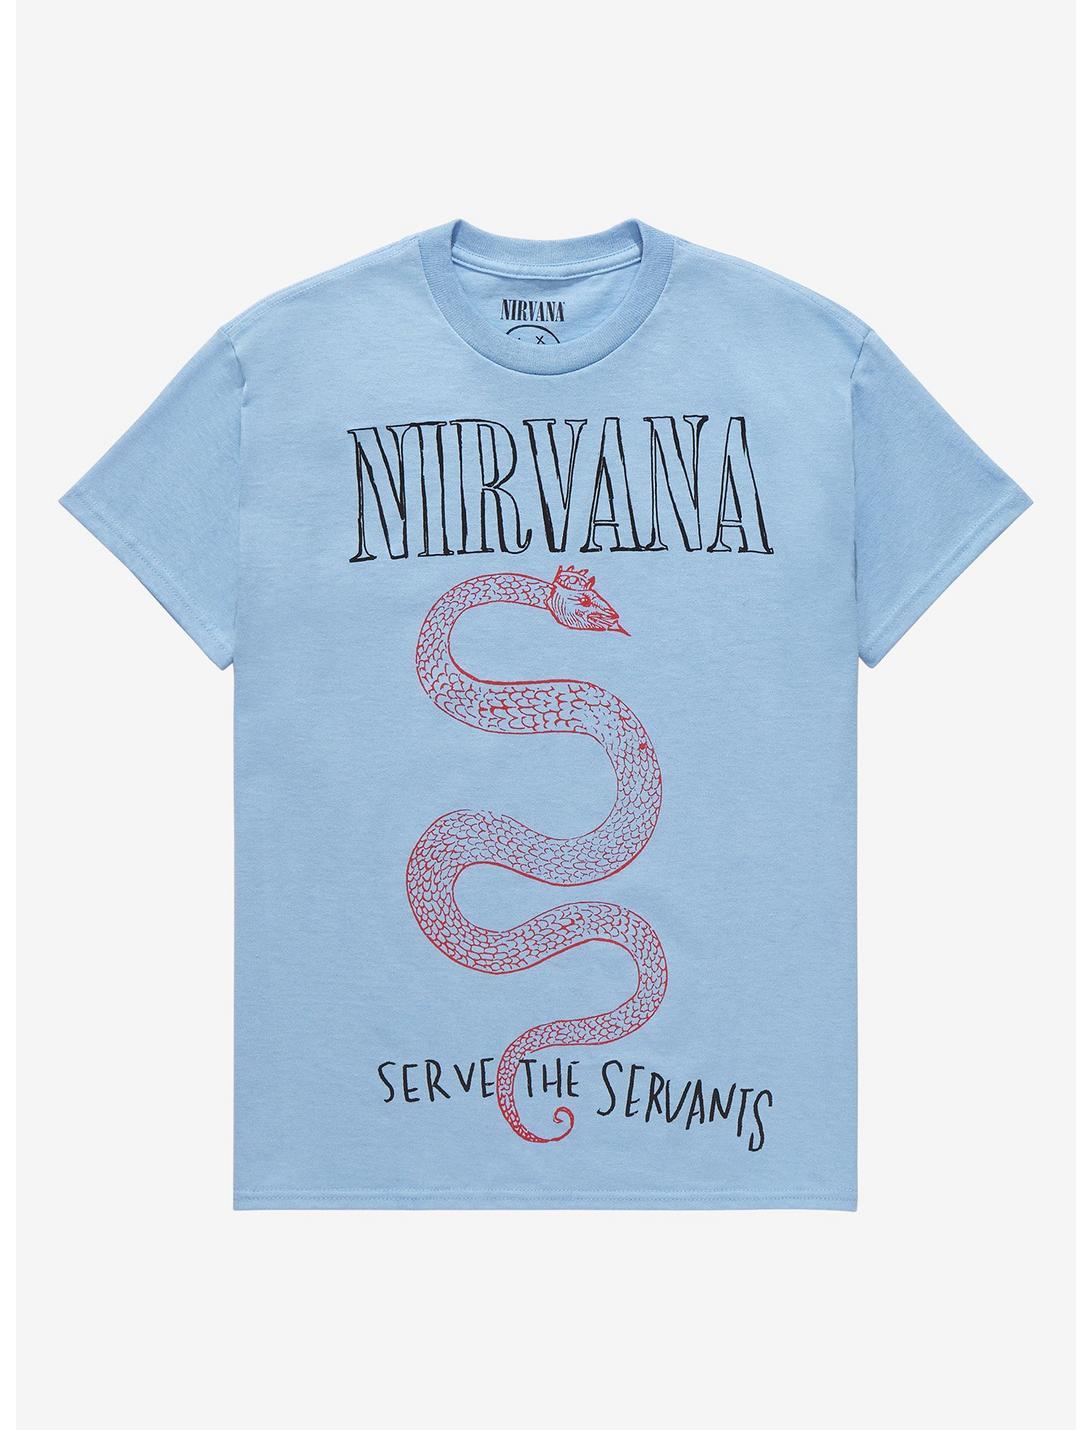 Nirvana Serve The Servants Boyfriend Fit Girls T-Shirt, BABY BLUE, hi-res